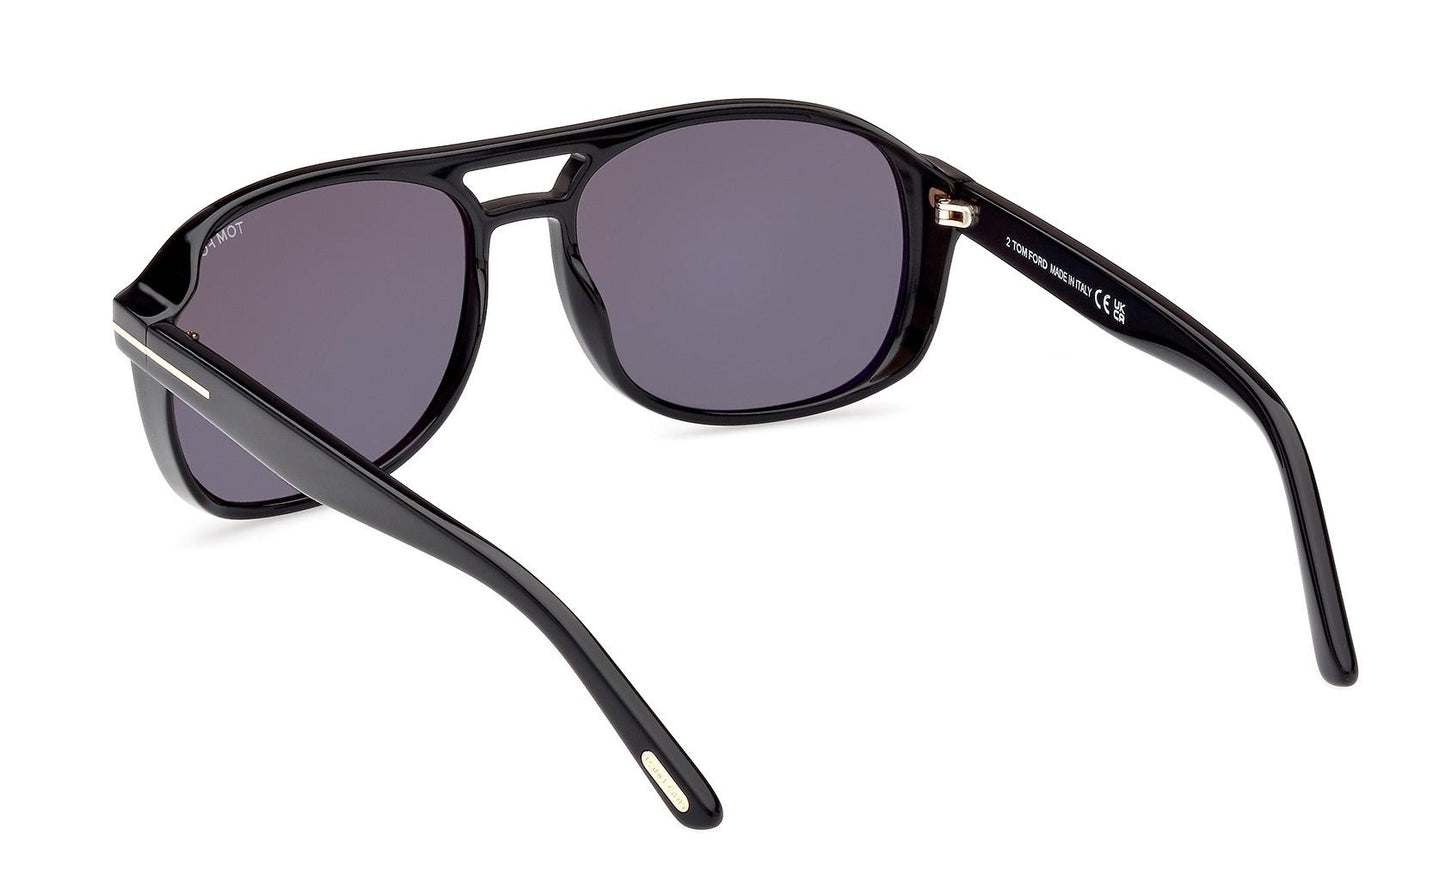 Tom Ford Rosco Sunglasses FT1022 01A